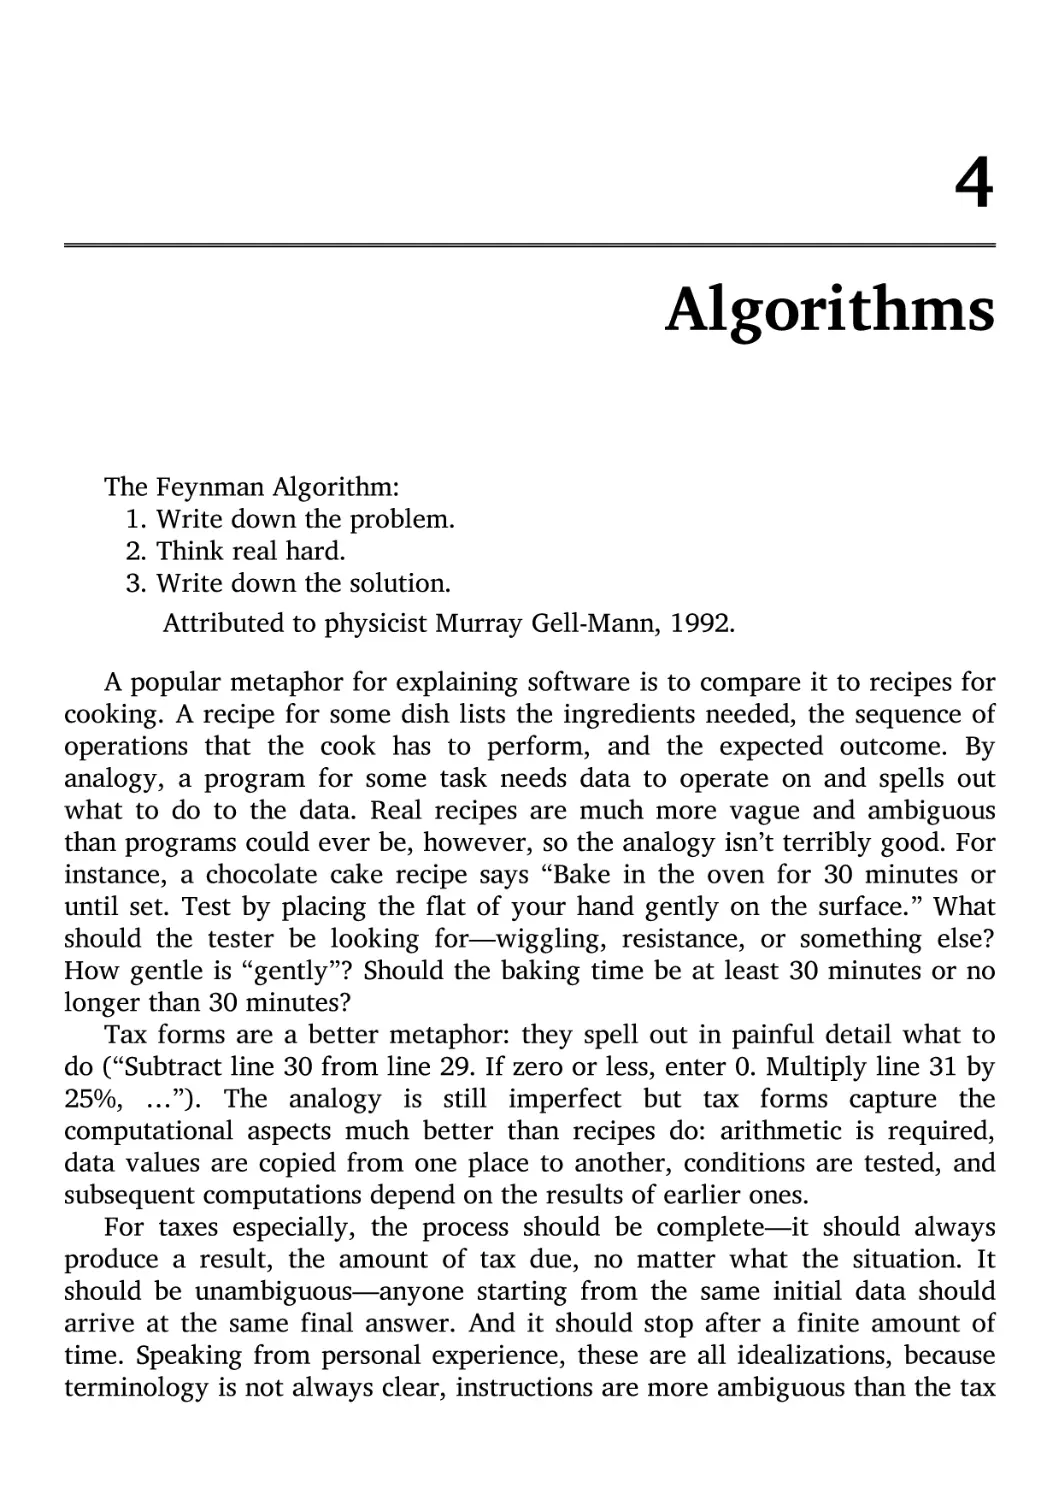 4. Algorithms